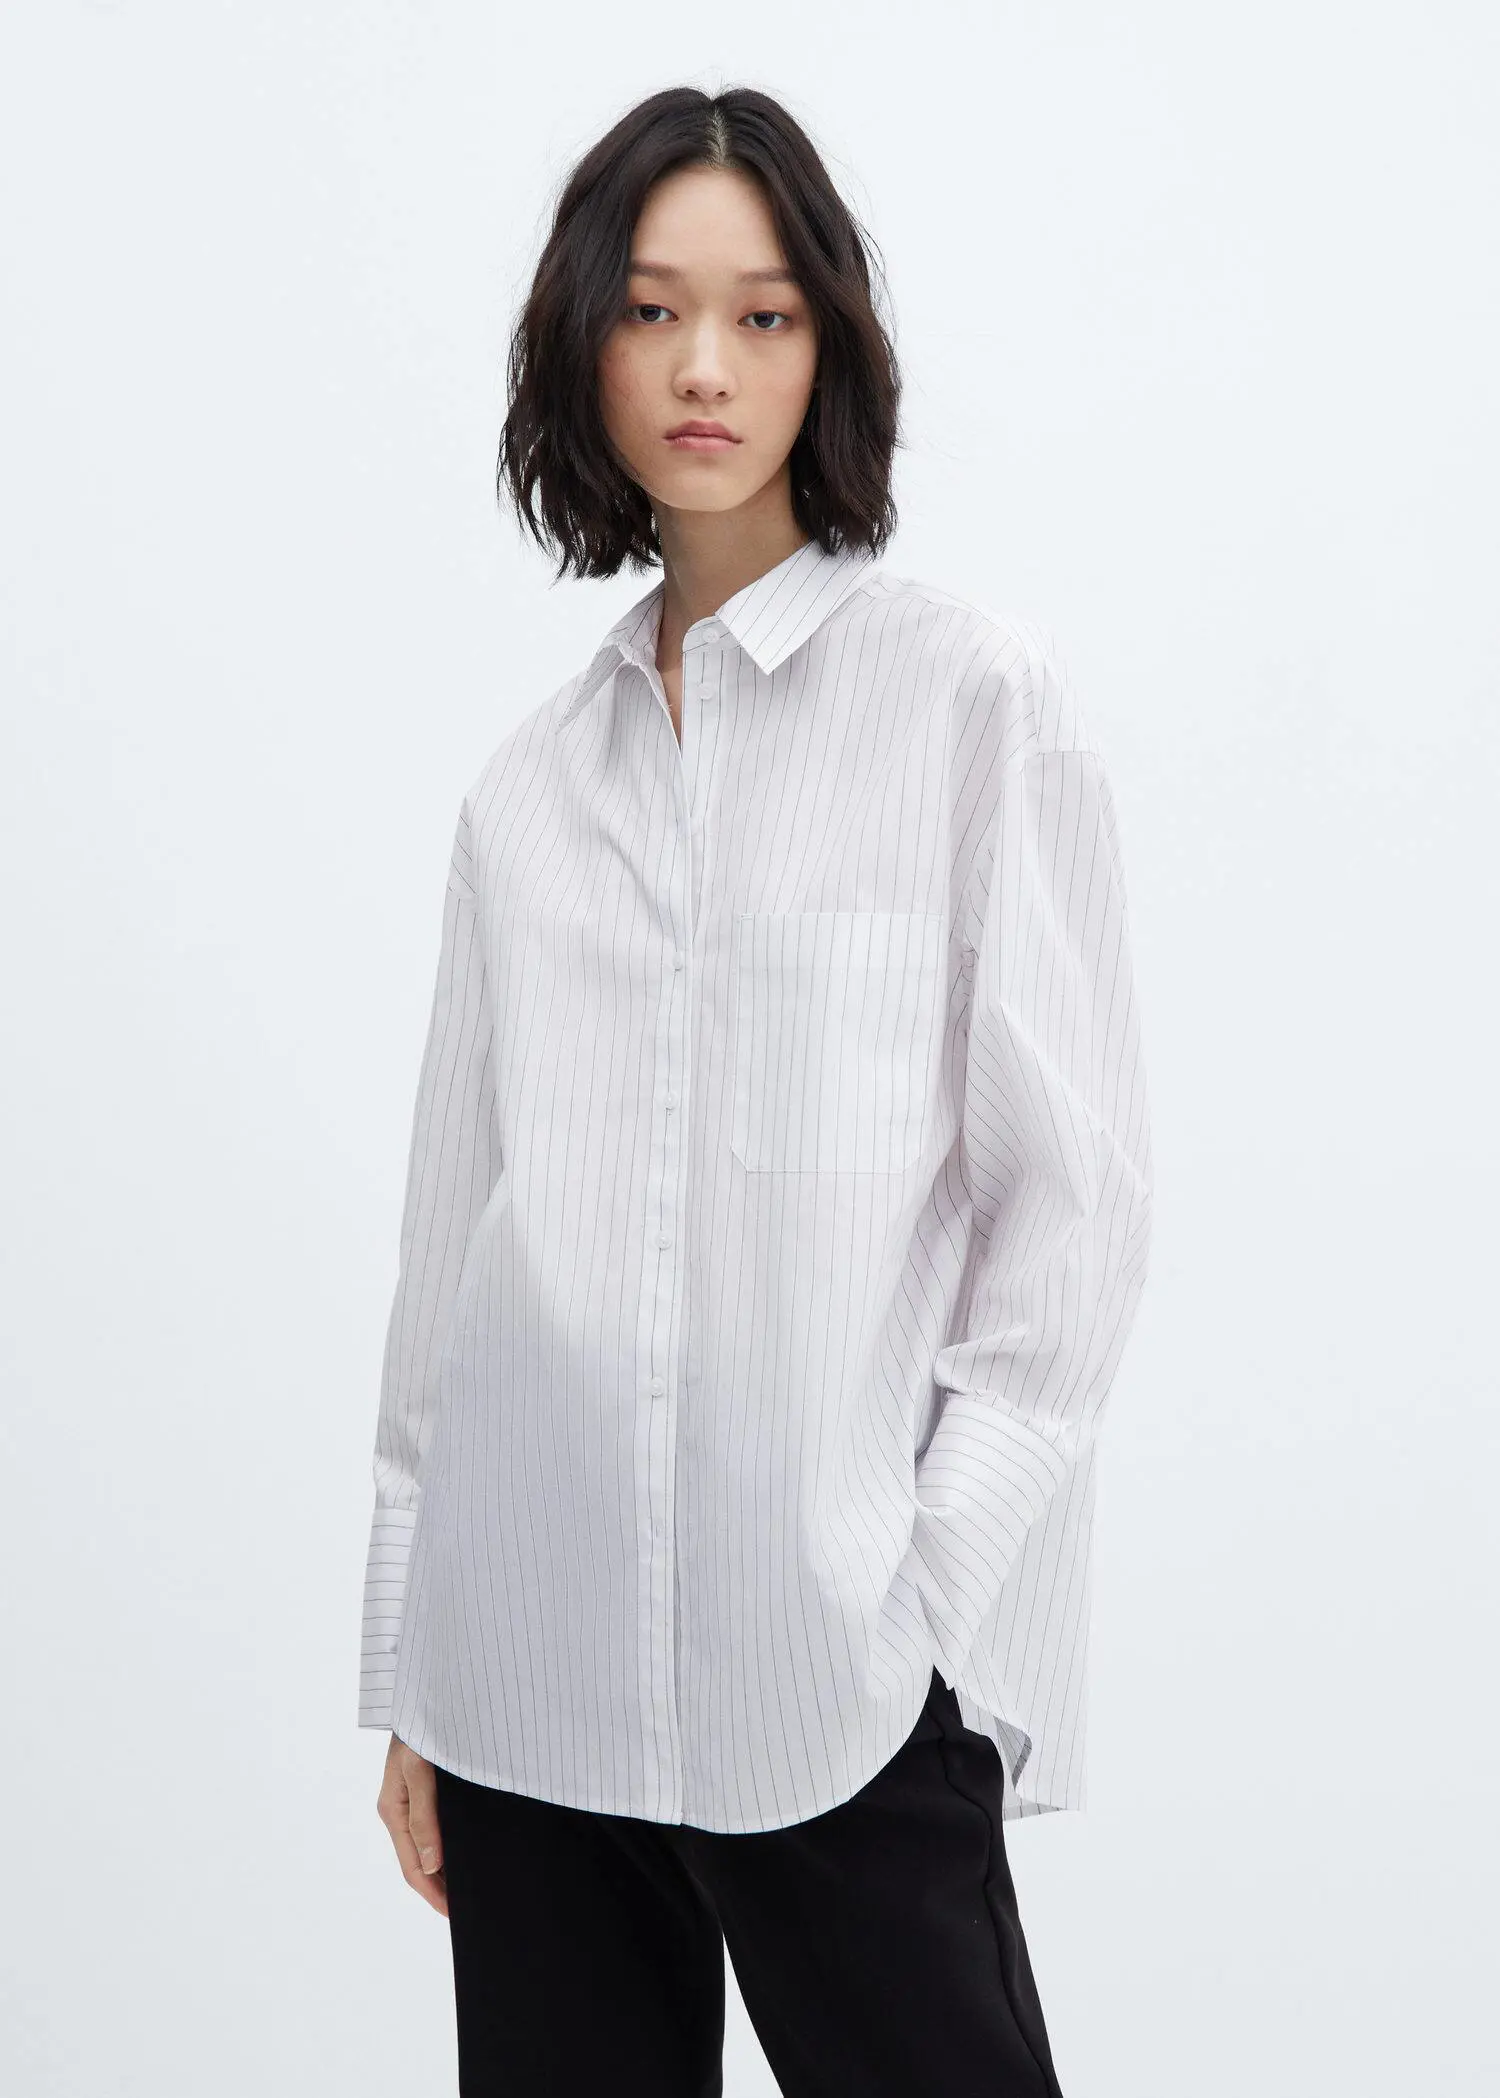 Mango 100% cotton striped shirt. 2